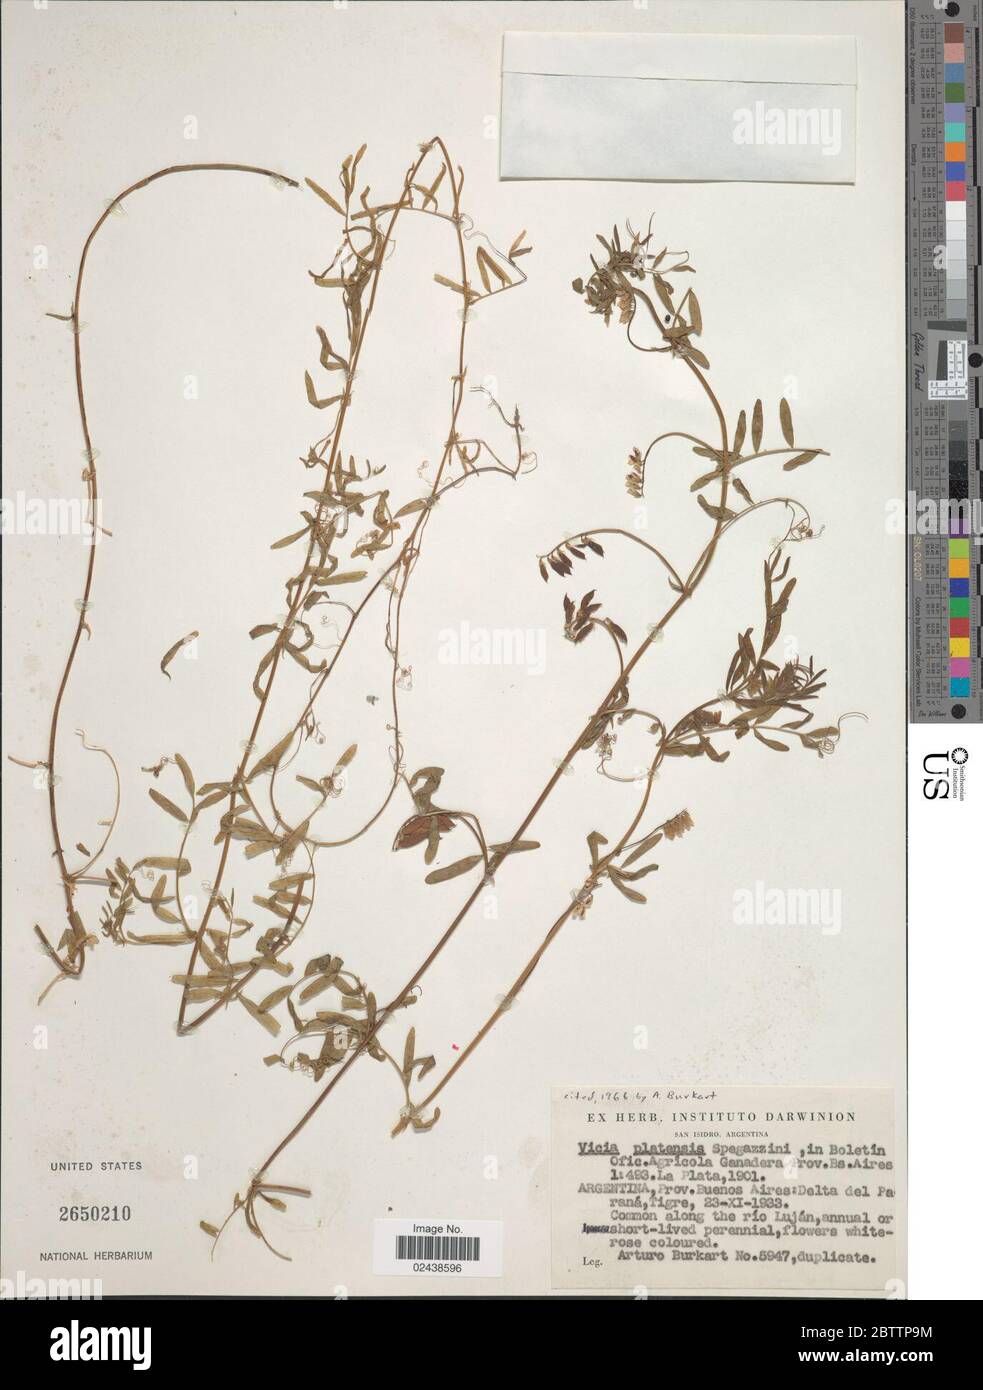 Vicia platensis Speg. Stock Photo